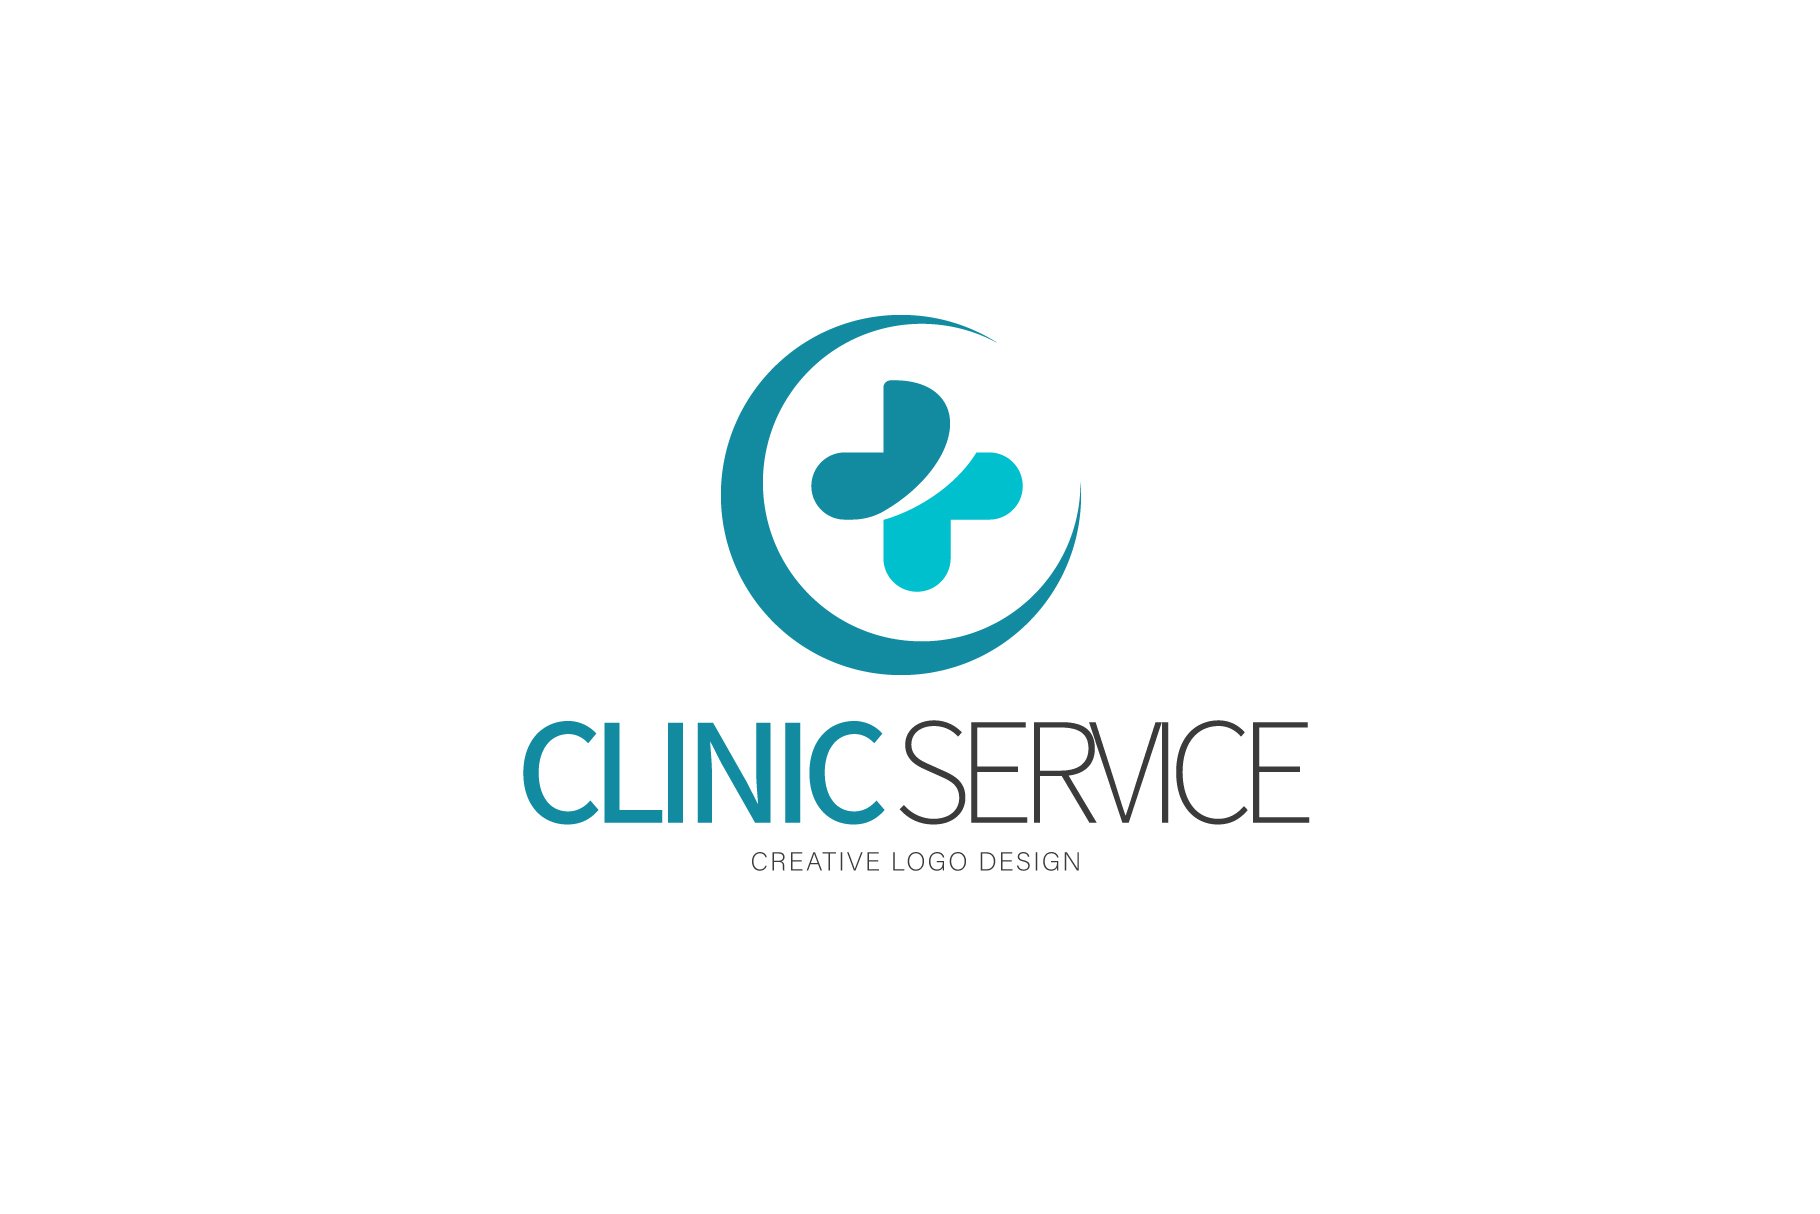 medic service logo cover image.